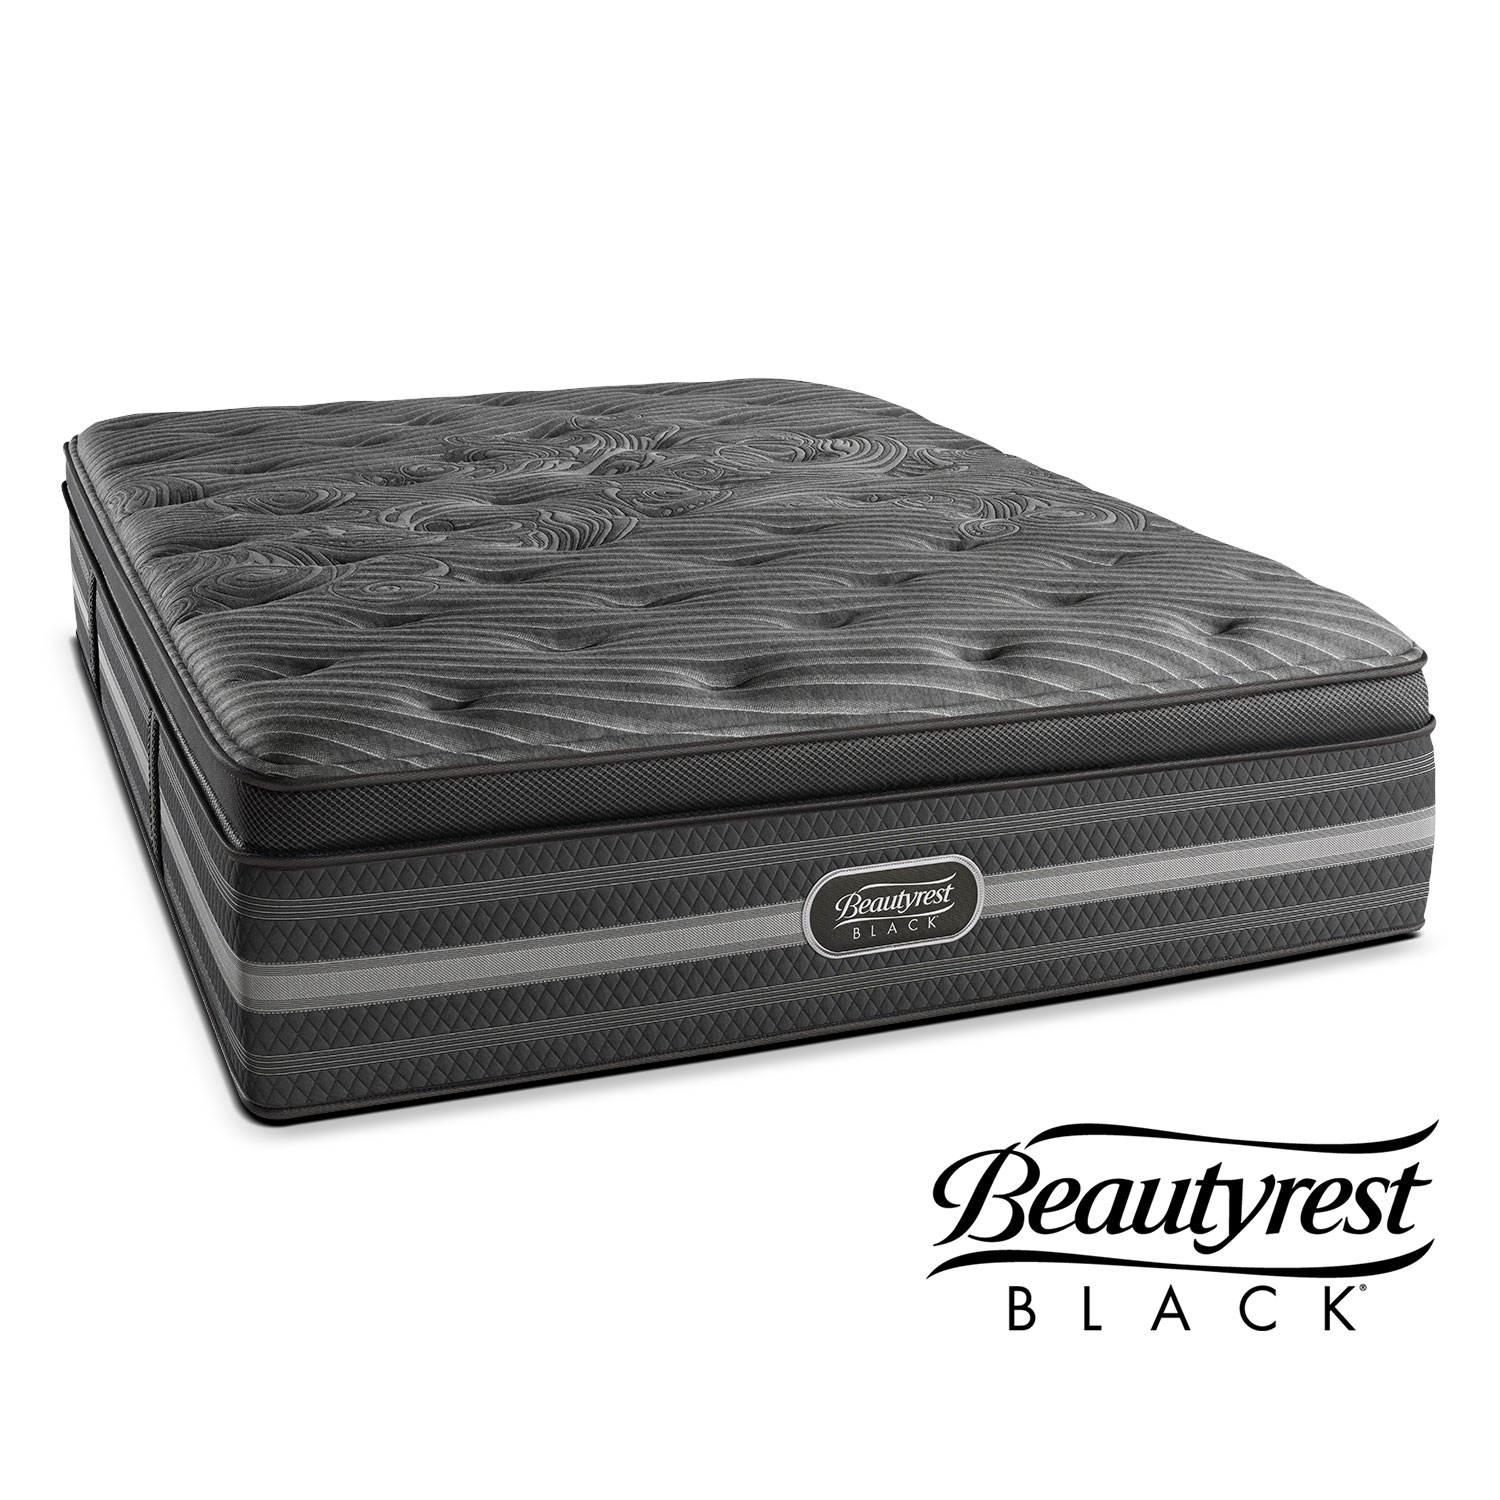 Beautyrest Black Mattresses | American Signature Furniture
